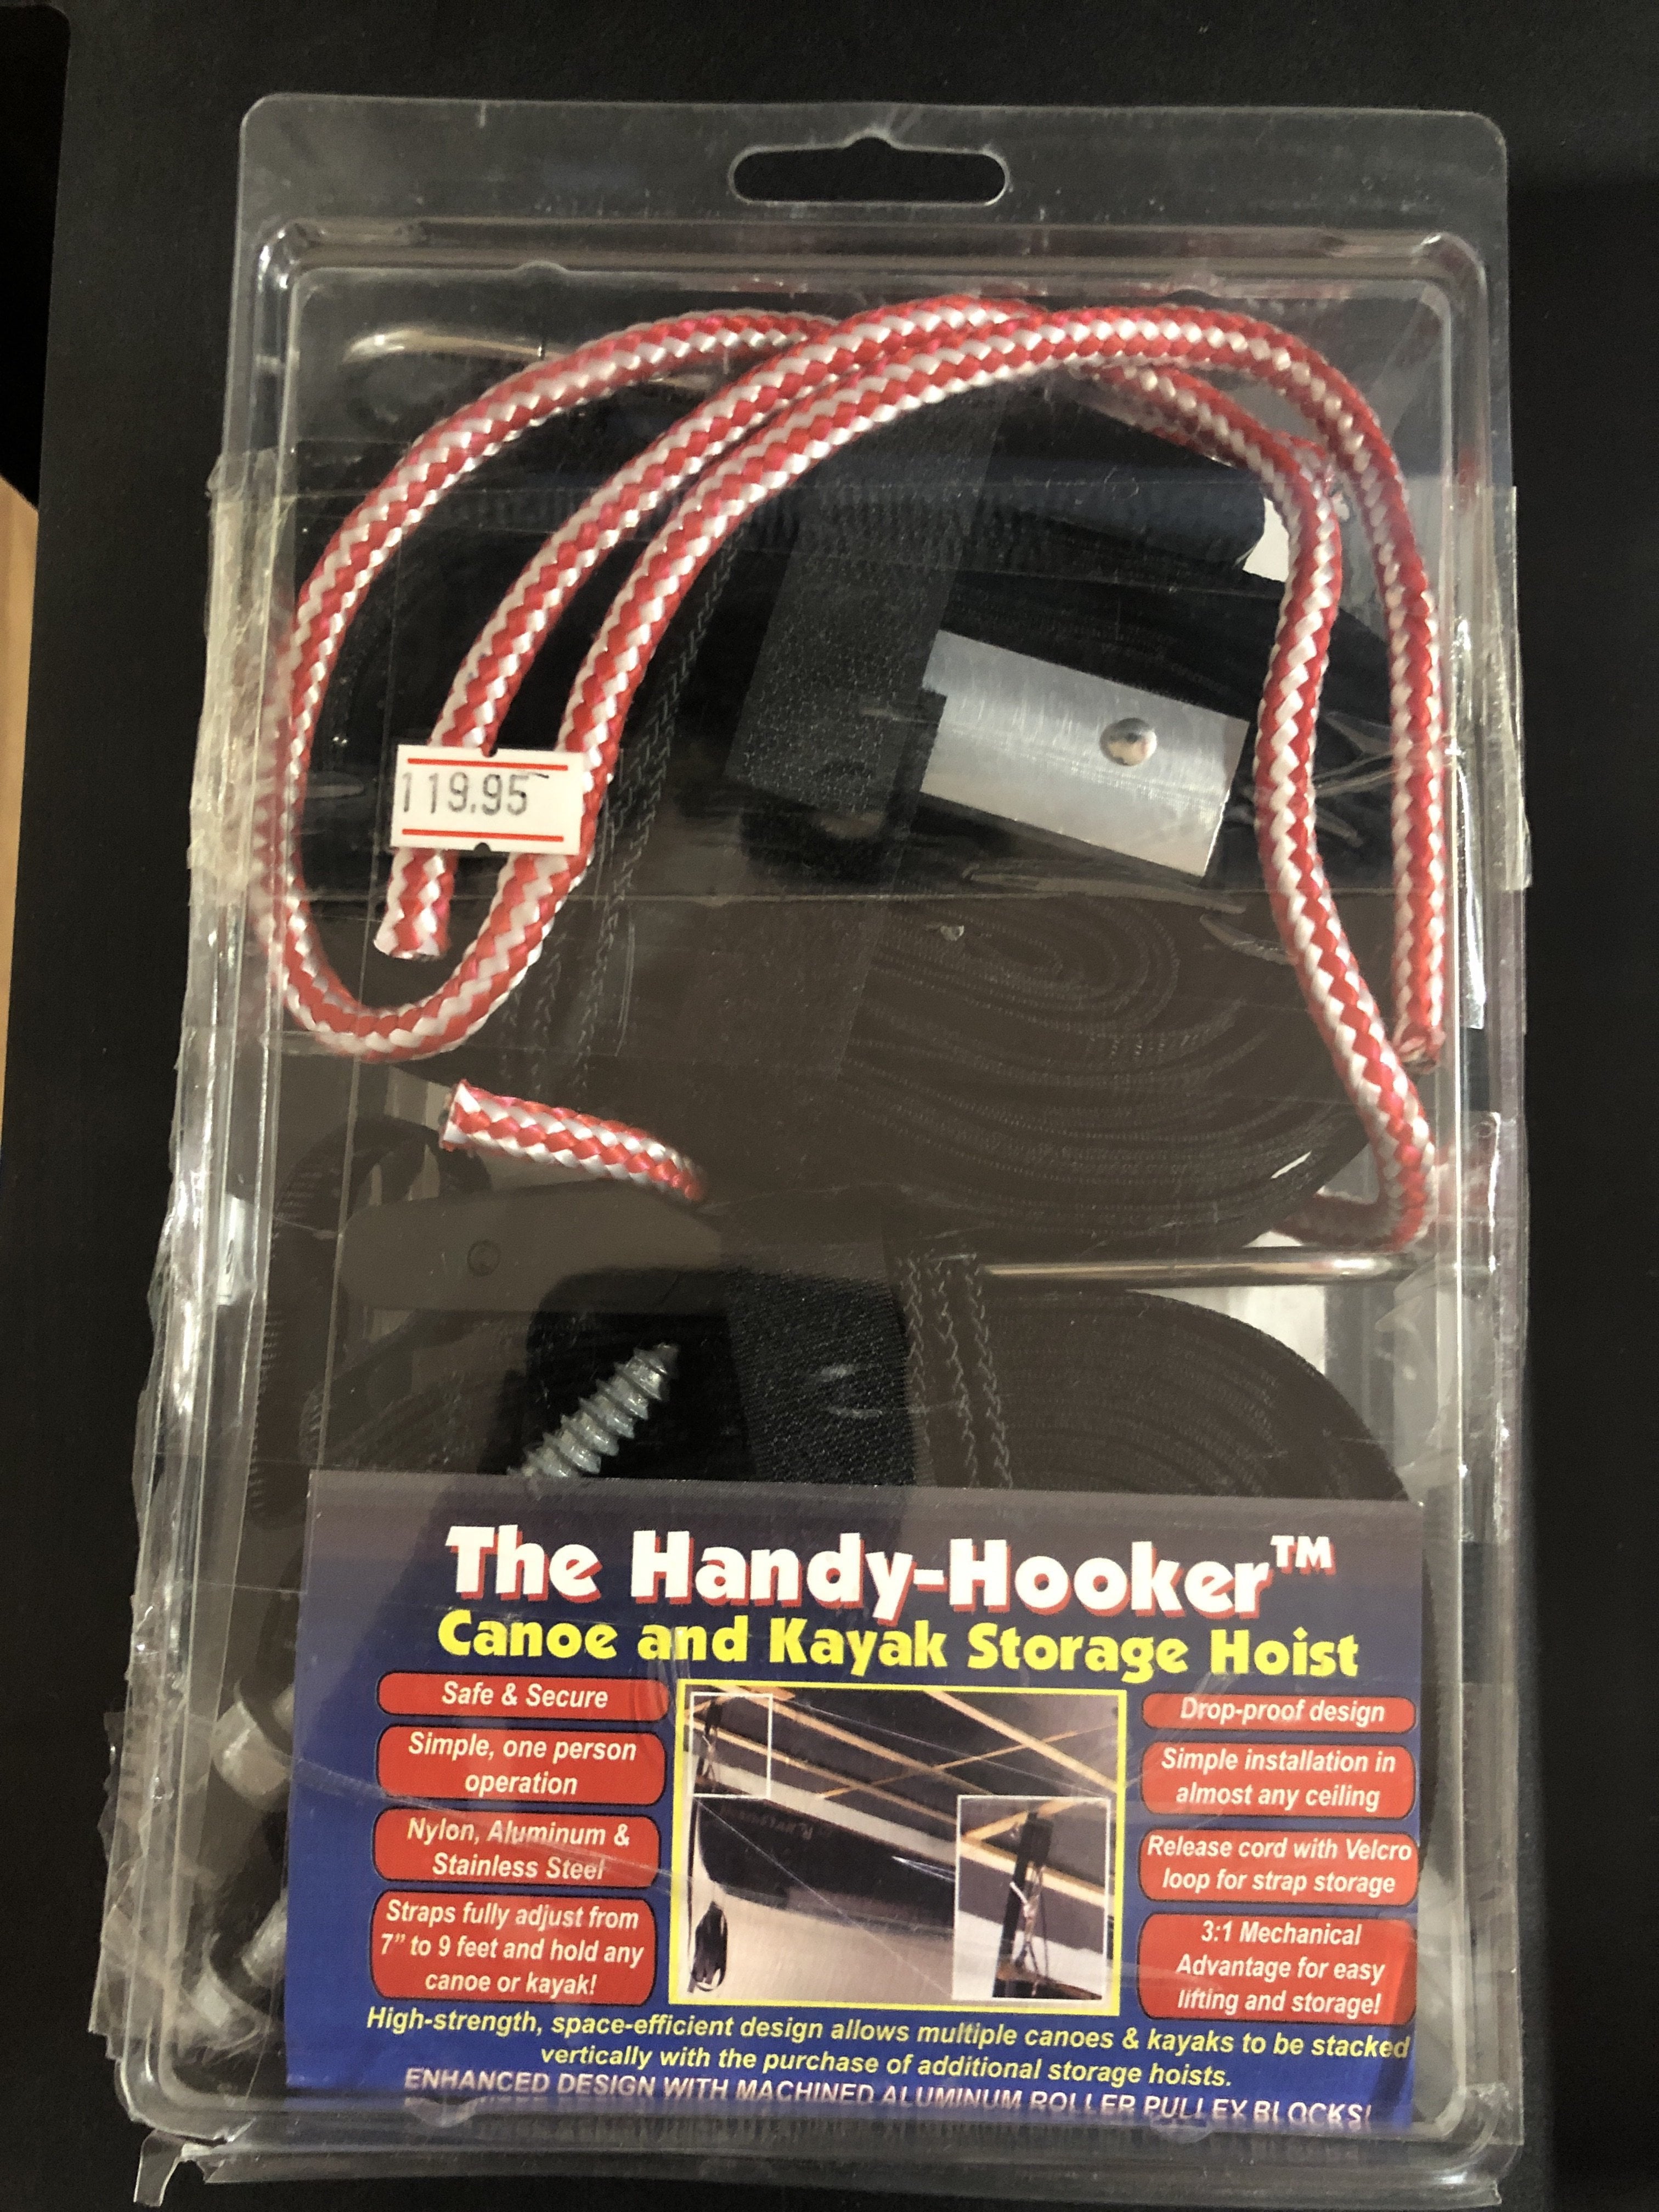 The handy-Hooker (kayak and canoe storage hoist)